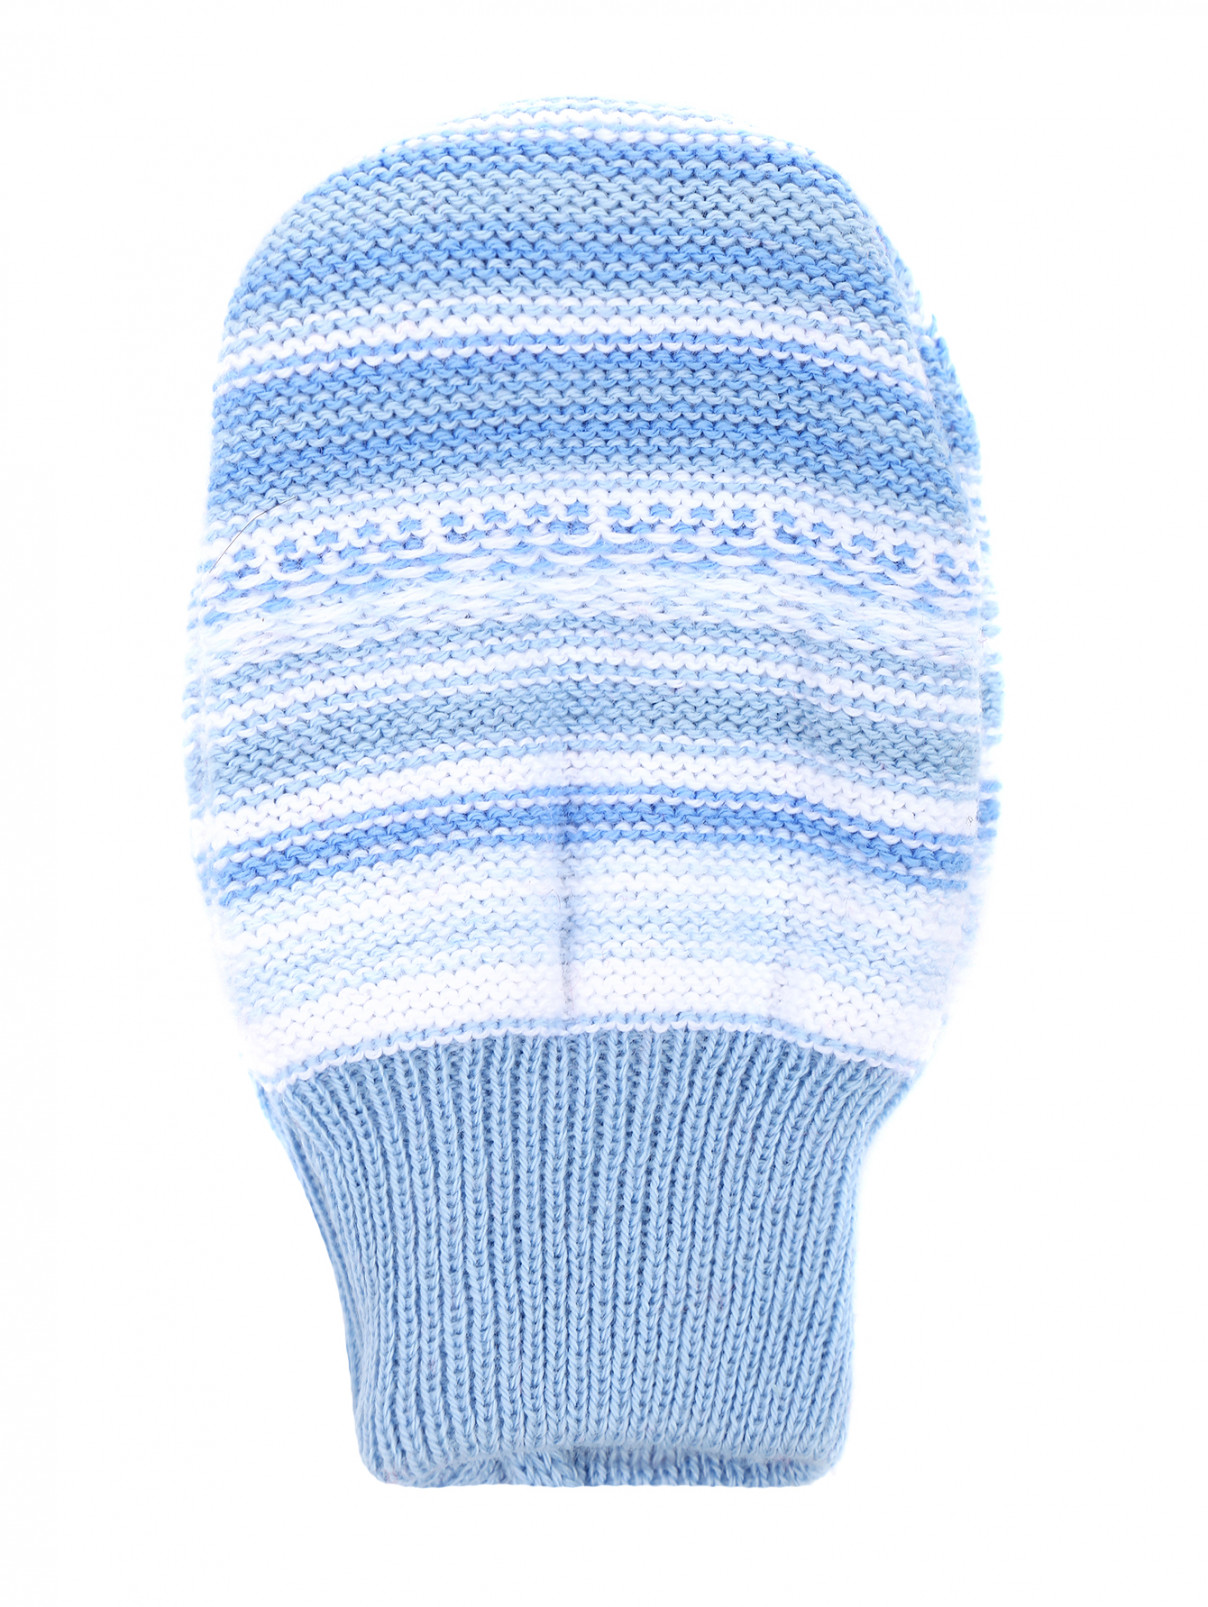 Варежки из шерсти с узором "полоска" Maximo  –  Обтравка1  – Цвет:  Синий